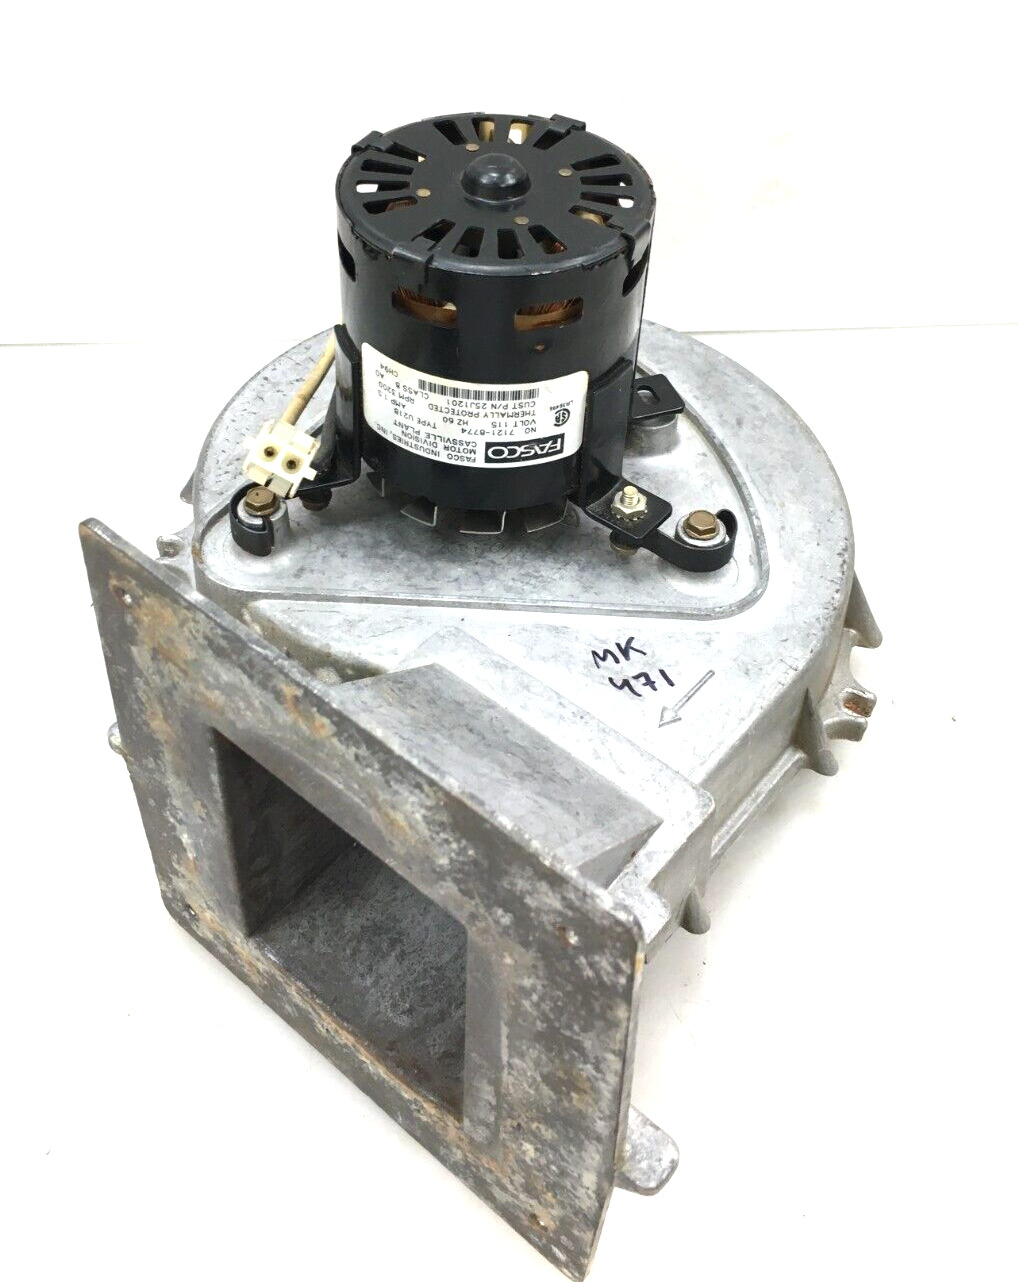 Fasco 25J1201 7121-8774 Furnace Draft Inducer Motor 115 V 3200 RPM used #MK471